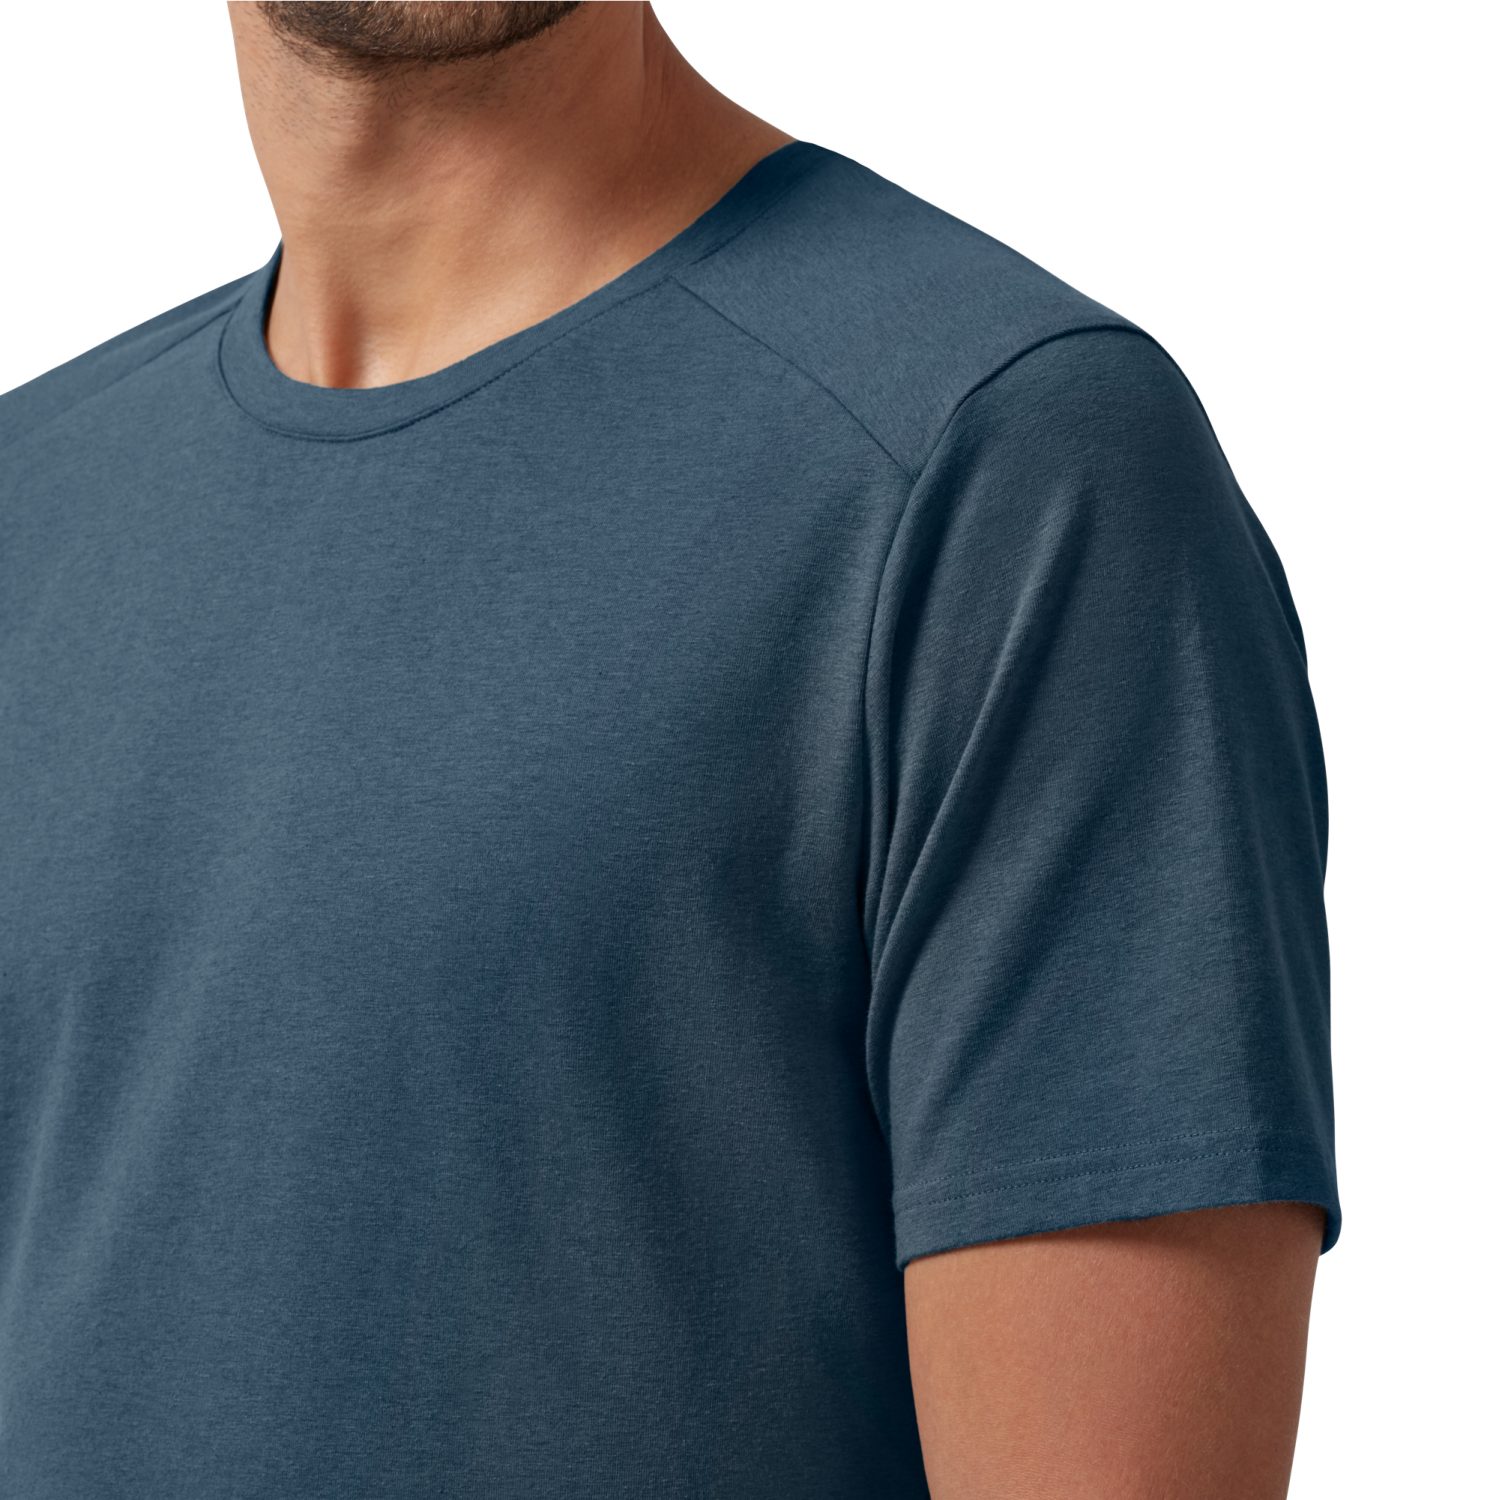 RUNNING ON Blau ON Laufhose T-Shirt